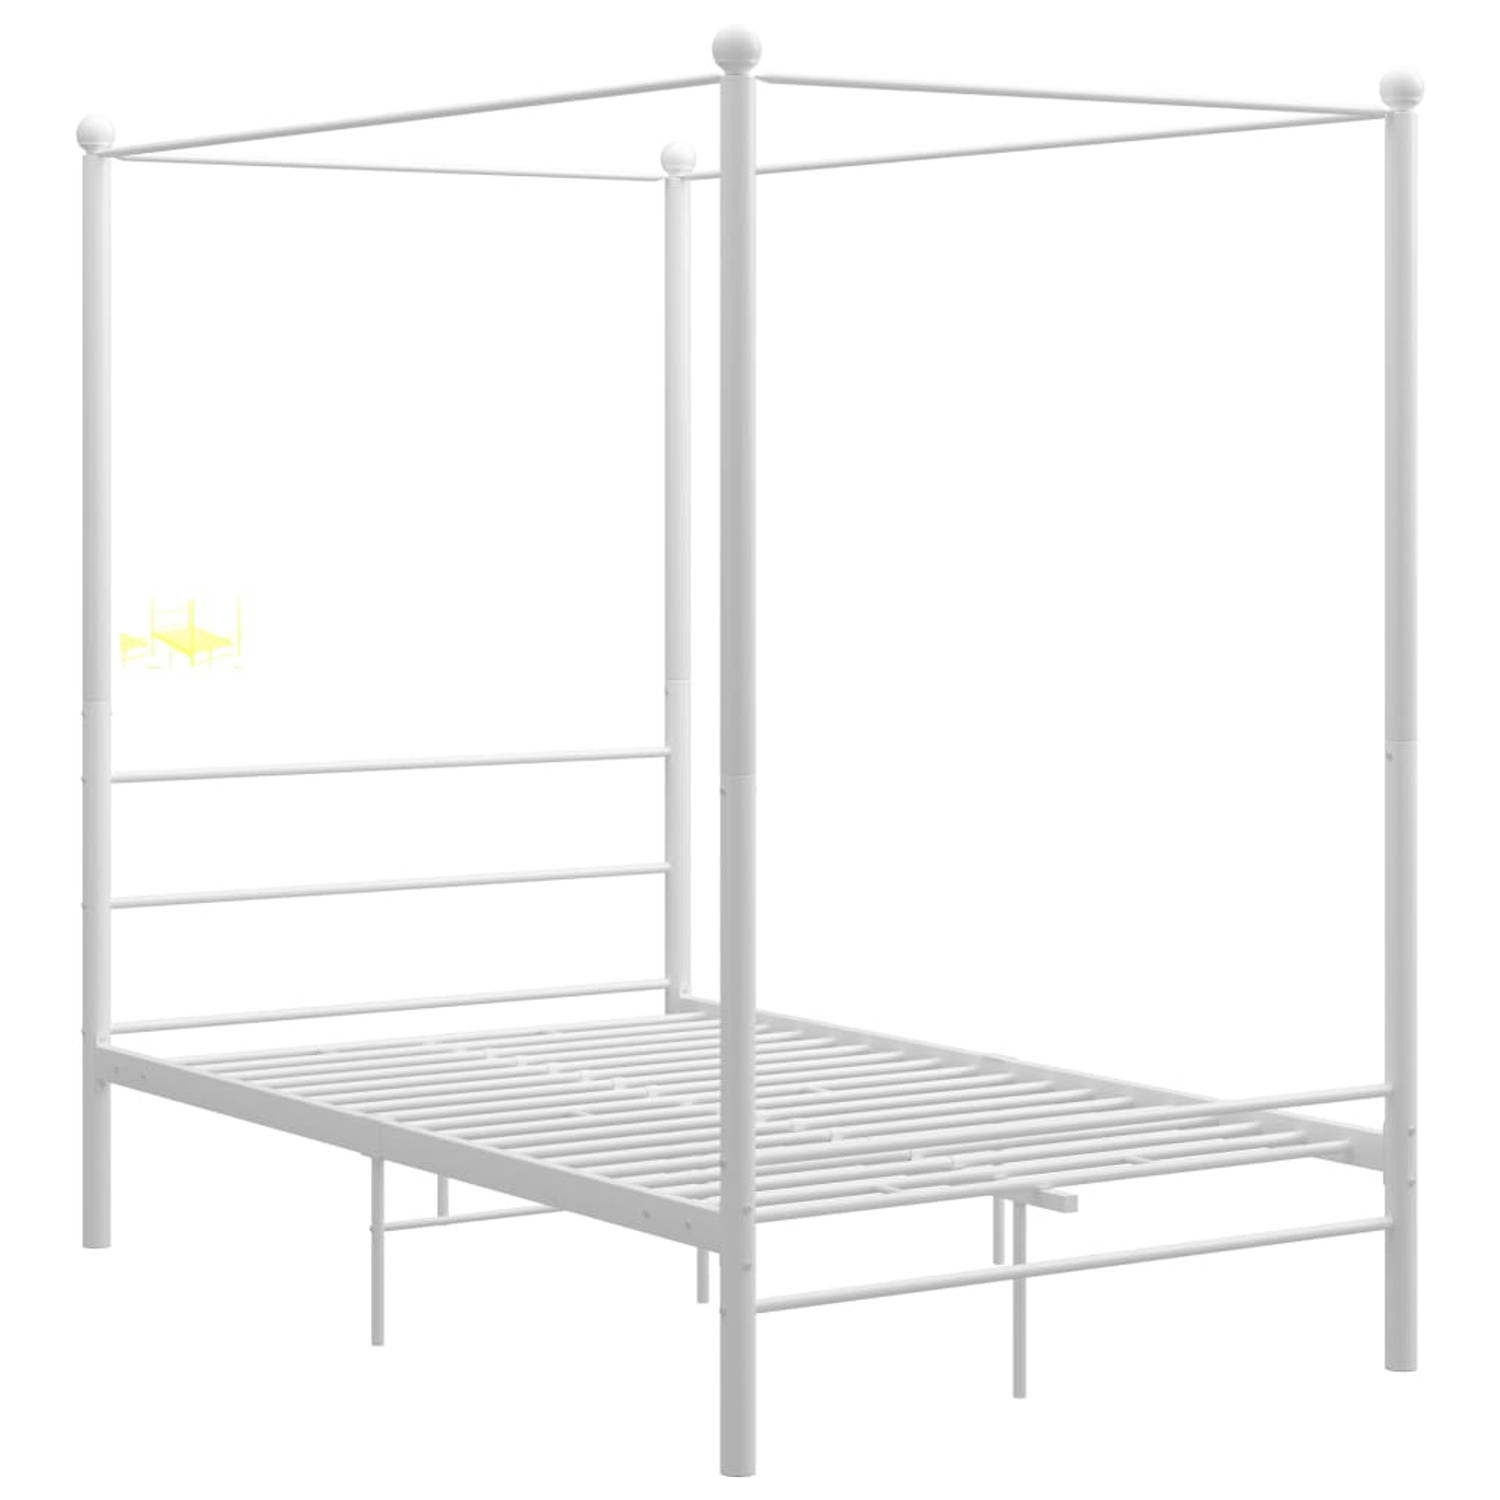 The Living Store Hemelbedframe metaal wit 120x200 cm - Bedframe - Bedframe - Bed Frame - Bed Frames - Bed - Bedden - Metalen Bedframe - Metalen Bedframes - 2-persoonsbed - 2